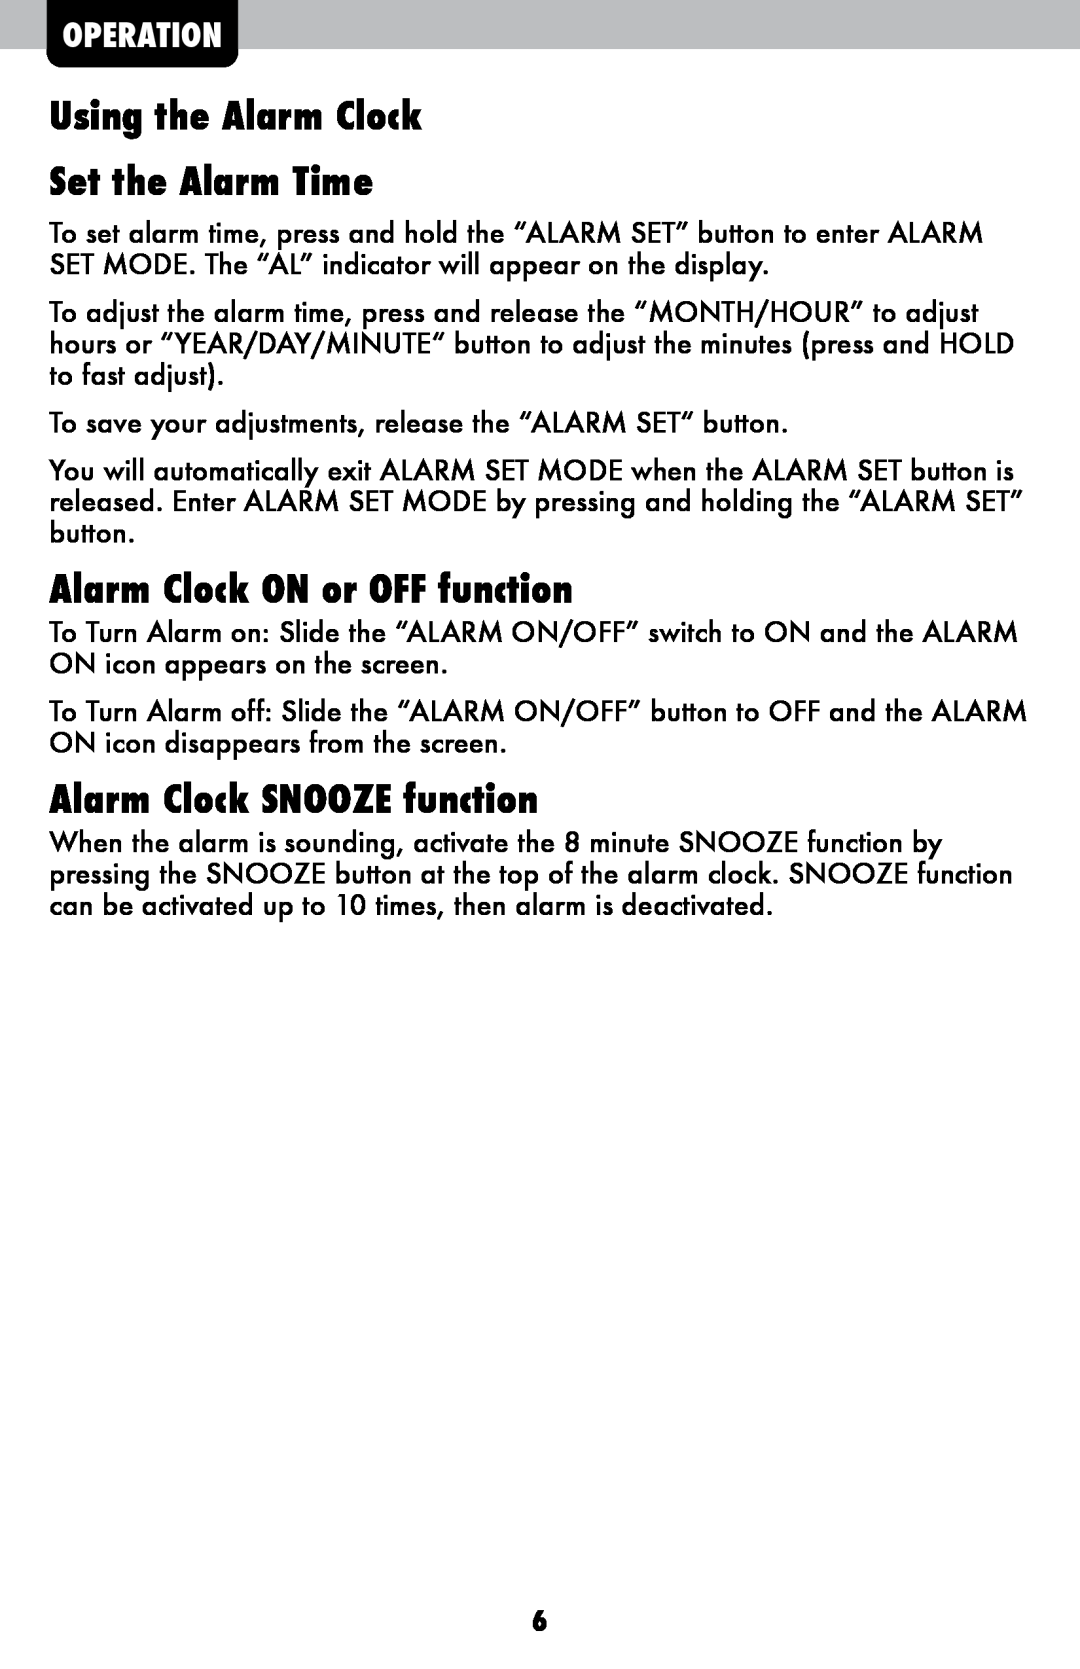 Acu-Rite 19958 Using the Alarm Clock Set the Alarm Time, Alarm Clock ON or OFF function, Alarm Clock SNOOZE function 